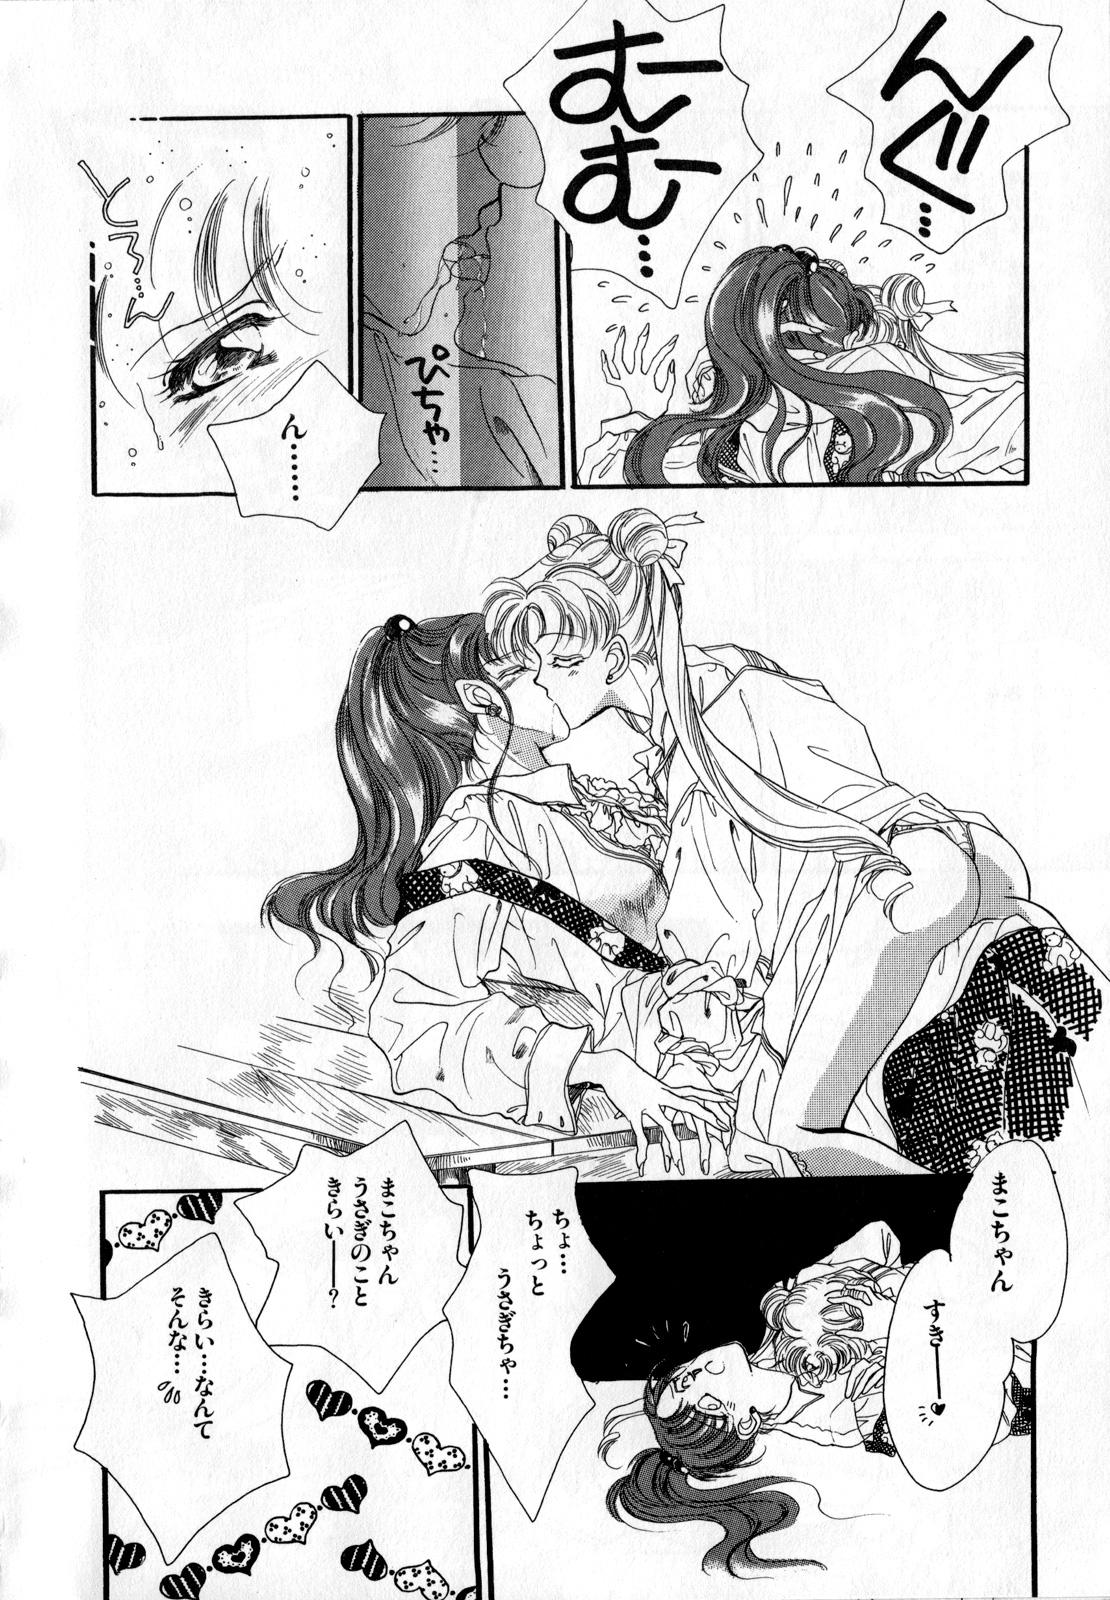 Rabuda Lunatic Party 2 - Sailor moon Kiss - Page 7